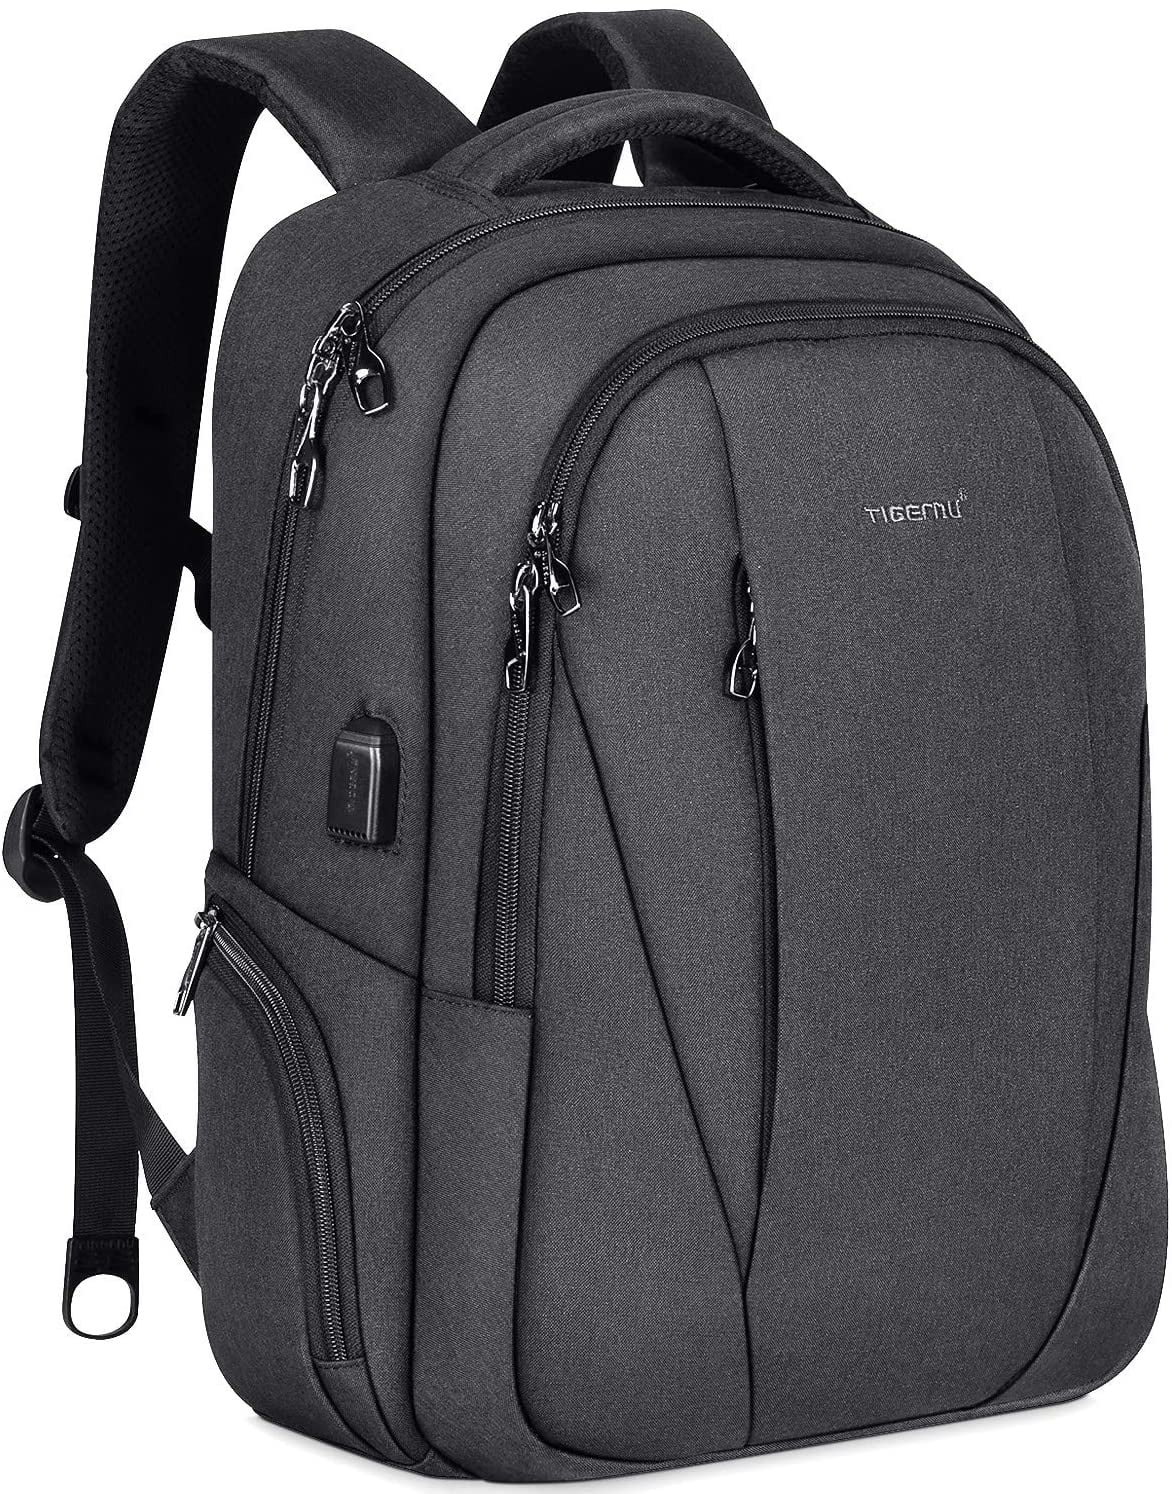 Tigernu New 14-17inch Waterproof Business Men Women backpack Laptop school Bags 